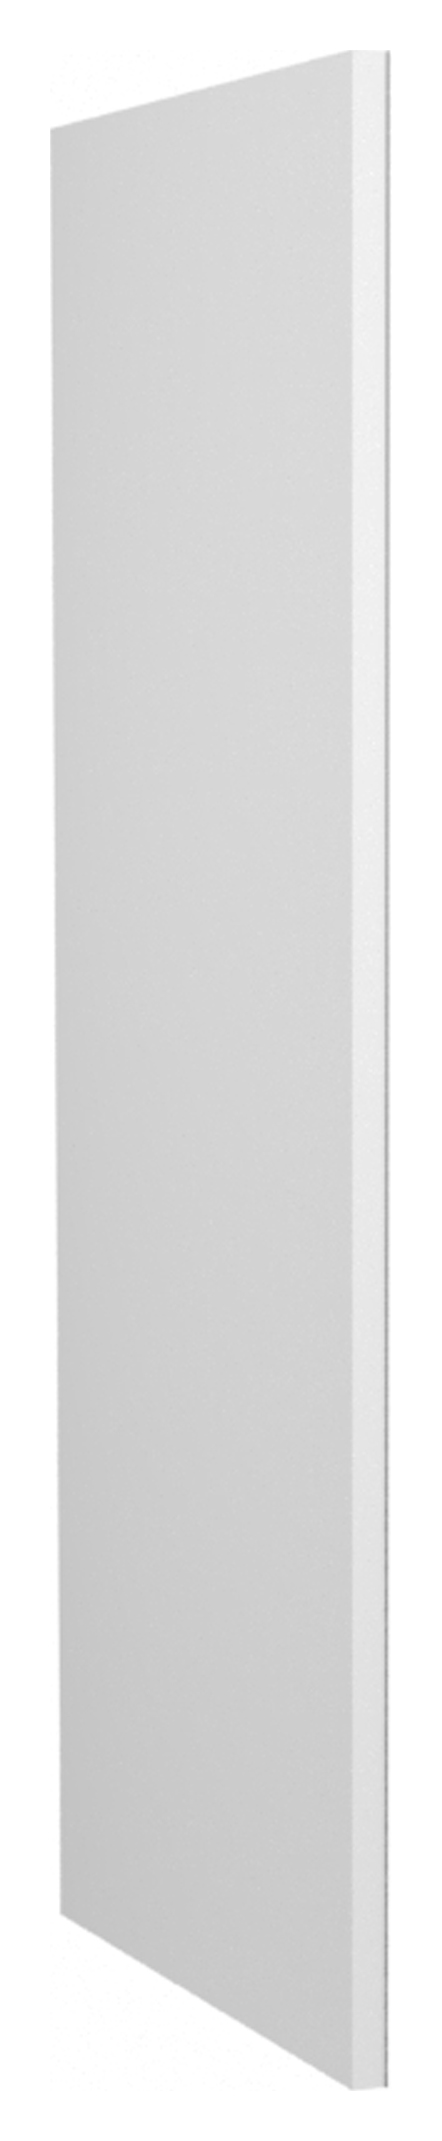 Image of Wickes Madison Matt White Decor Wall Panel - 18mm